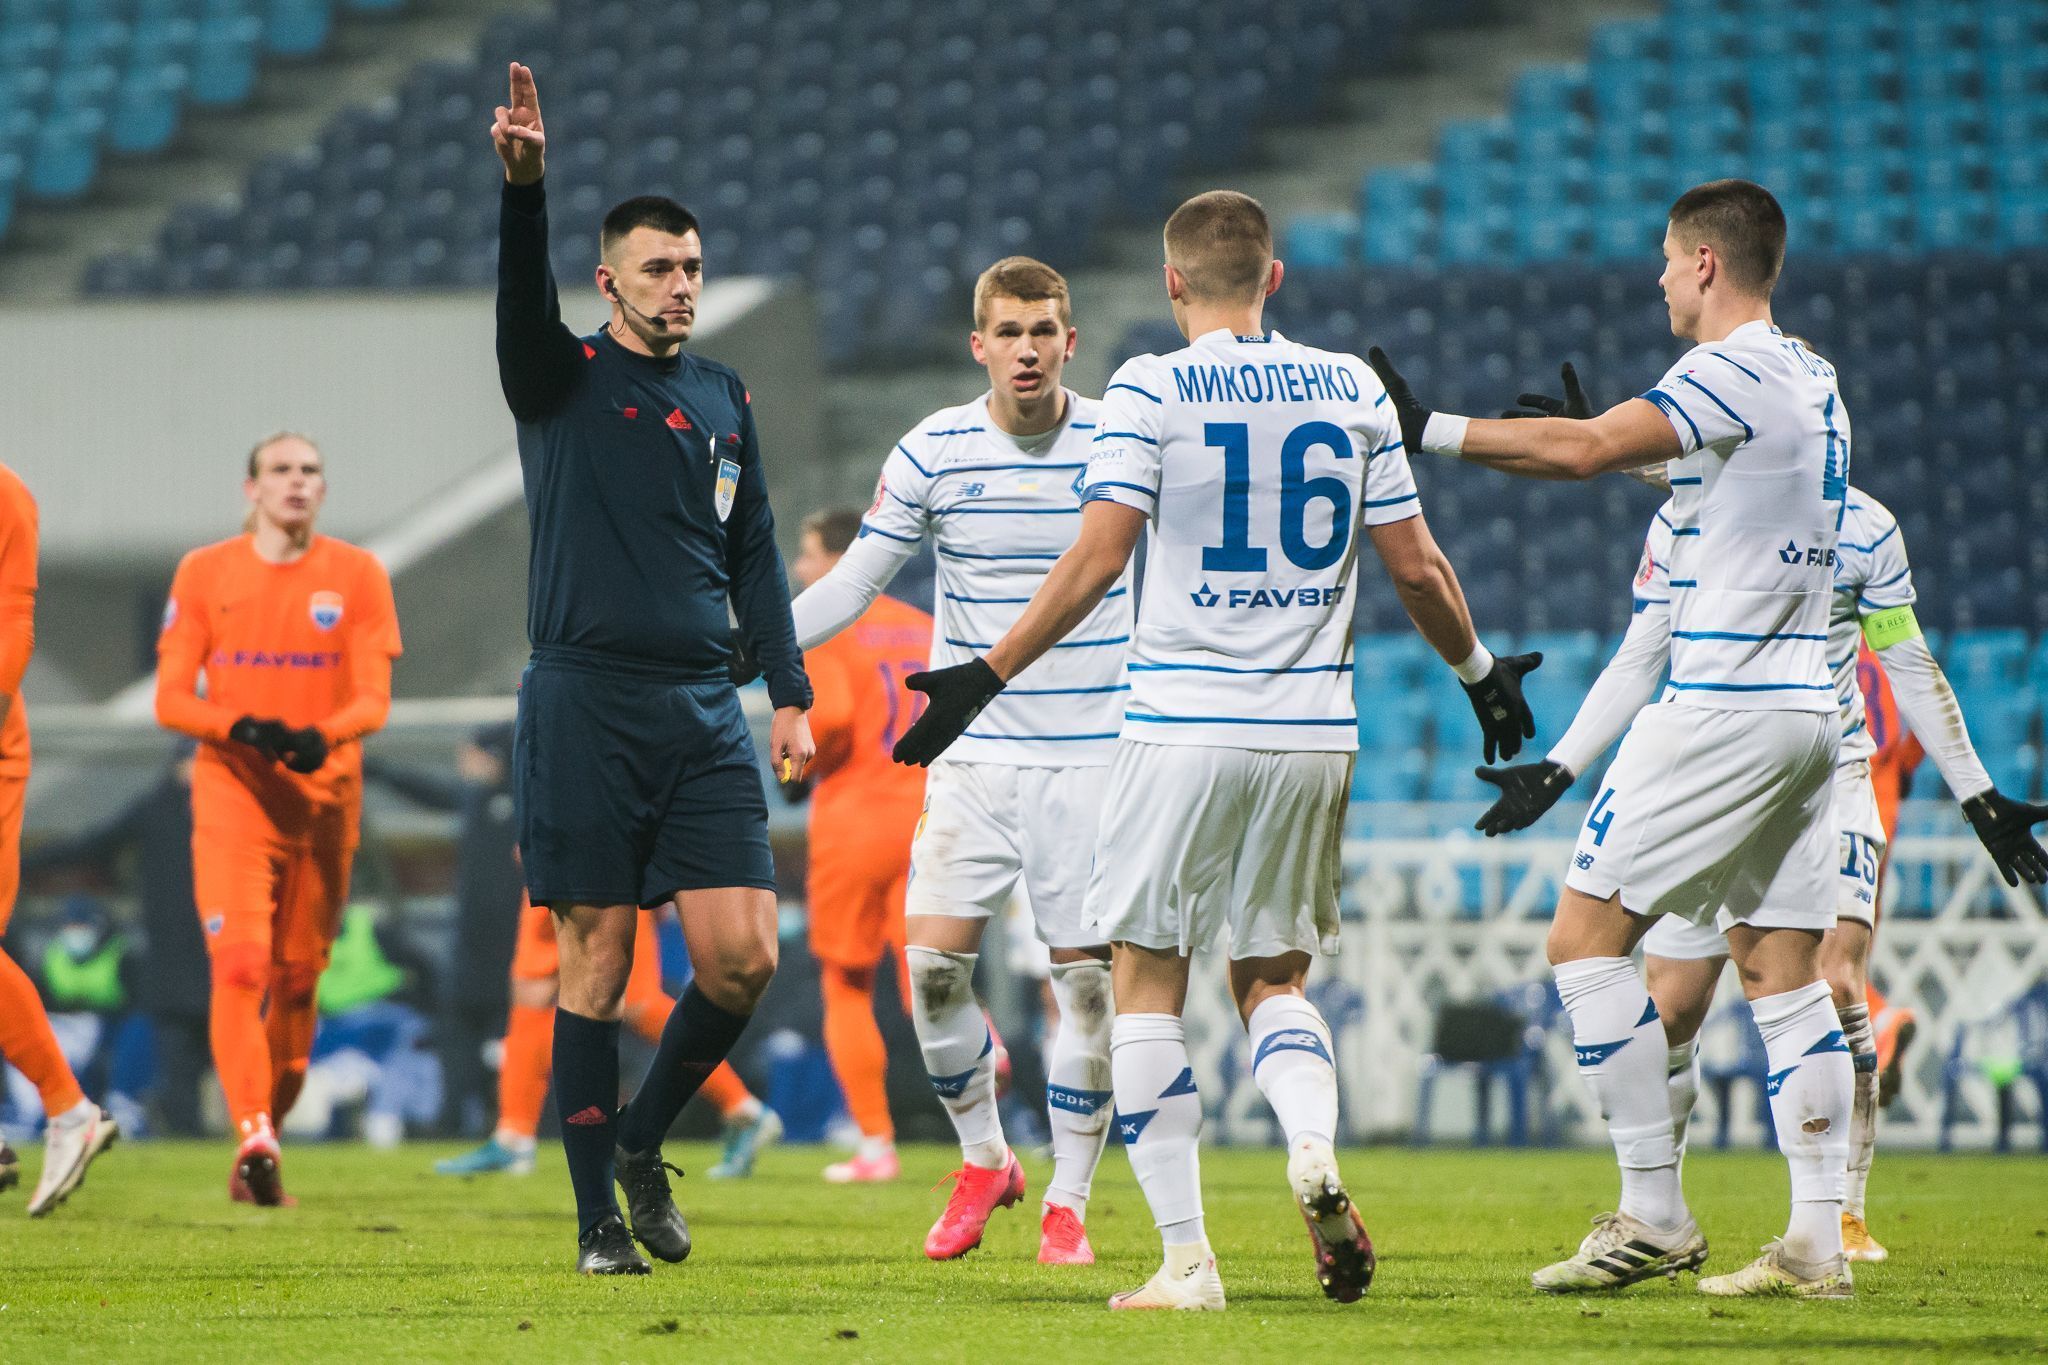 Andriy Kovalenko – Chornomorets vs Dynamo match referee